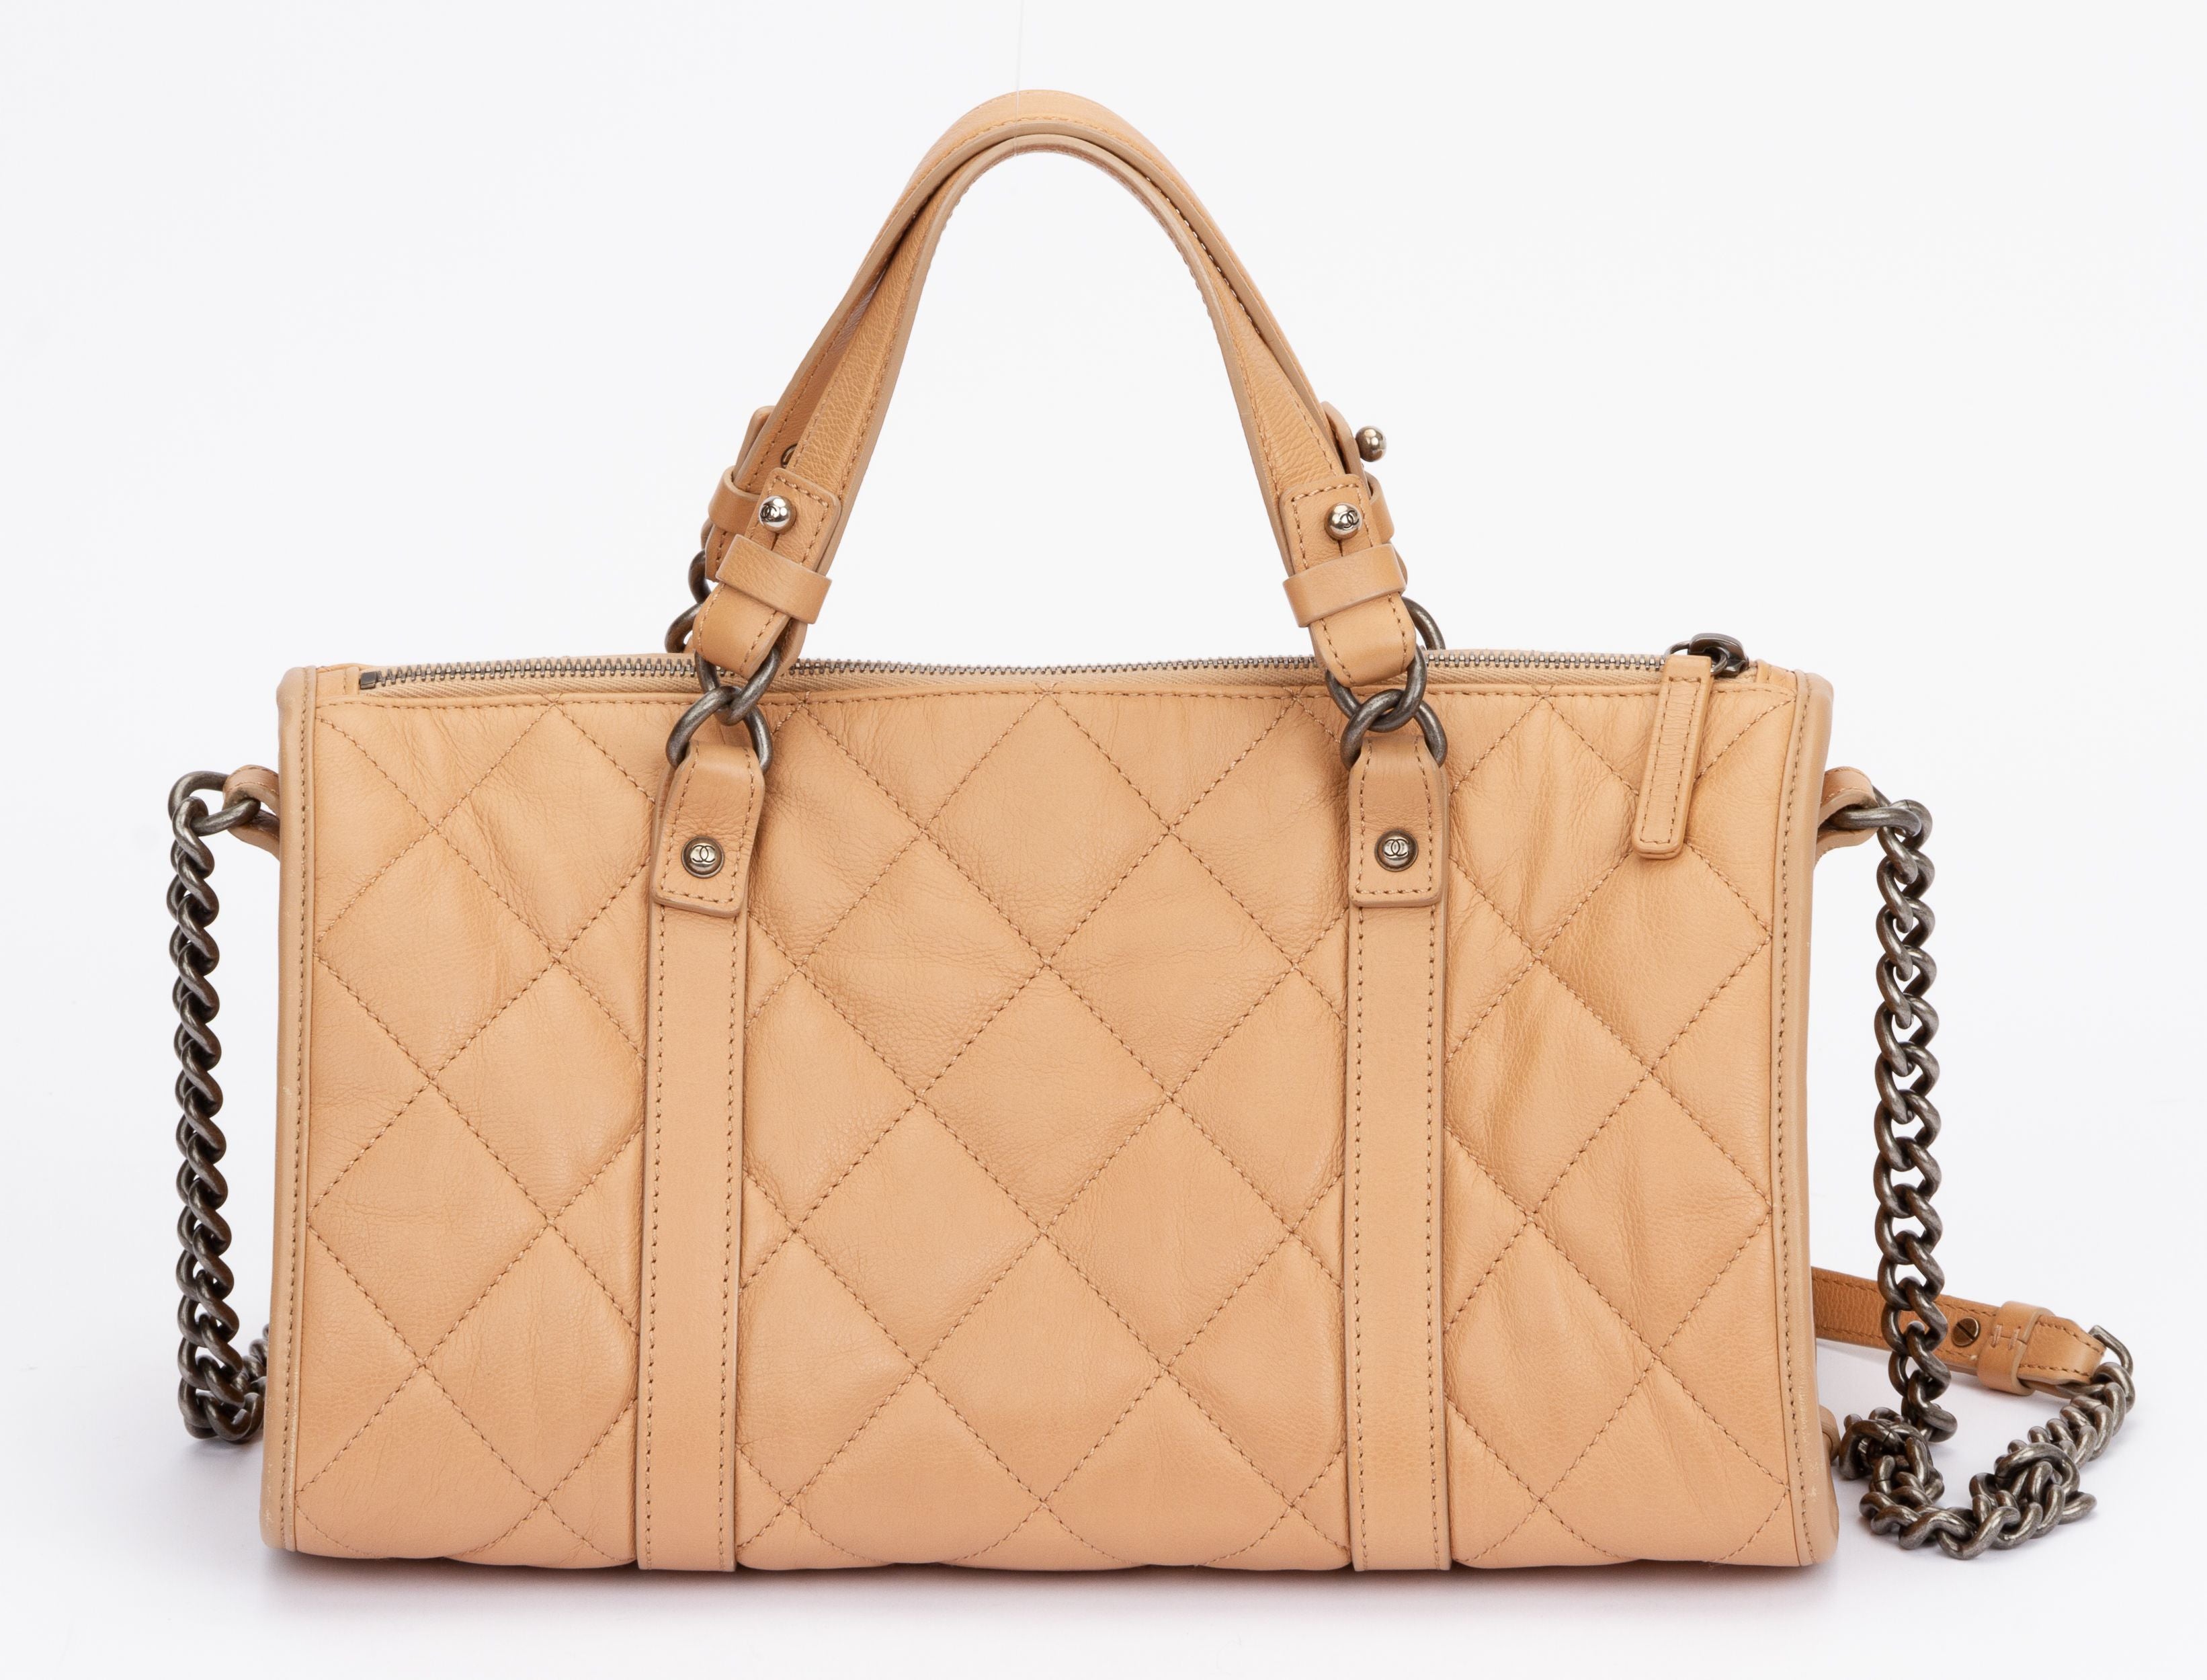 Chanel Beige Quilted Calfskin New Medium Boy Bag